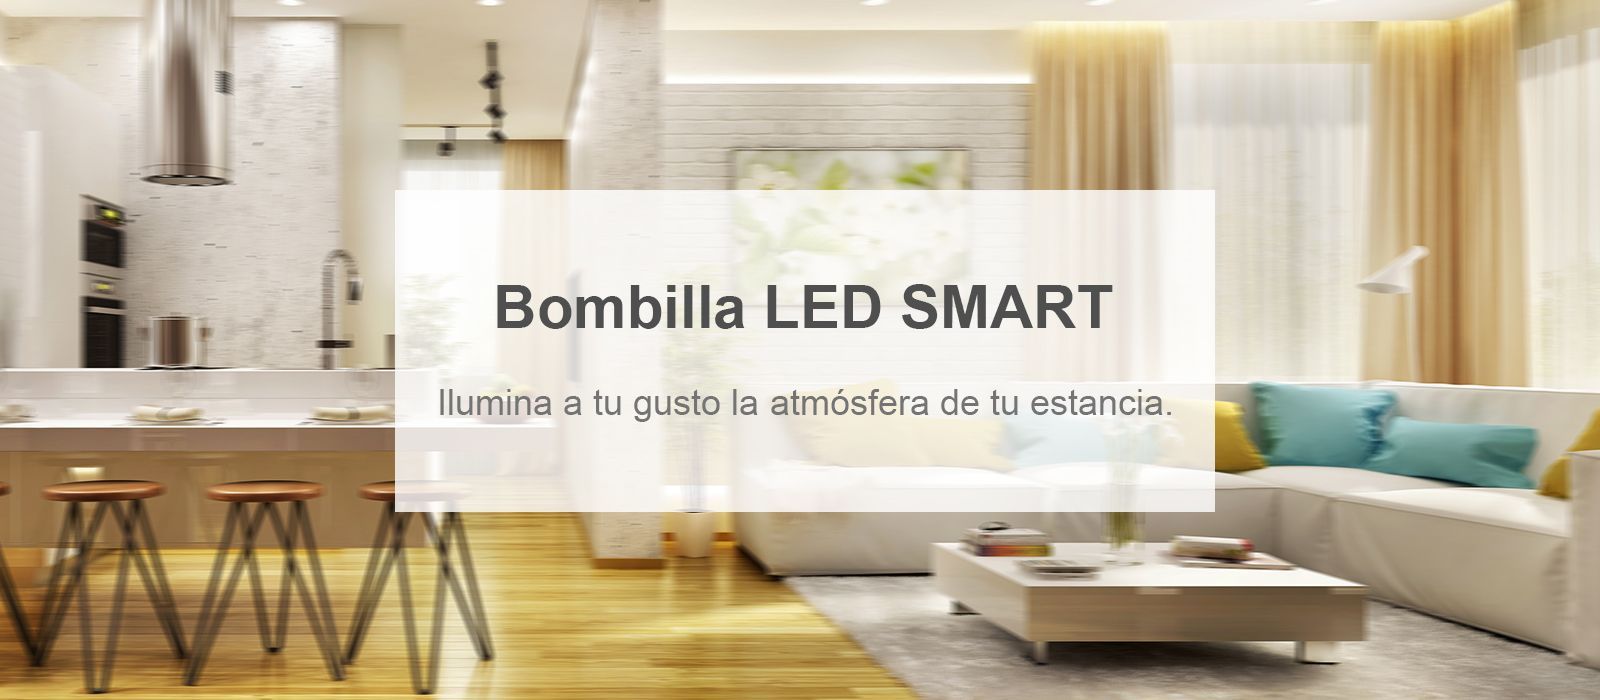 Bombillas LED Smart